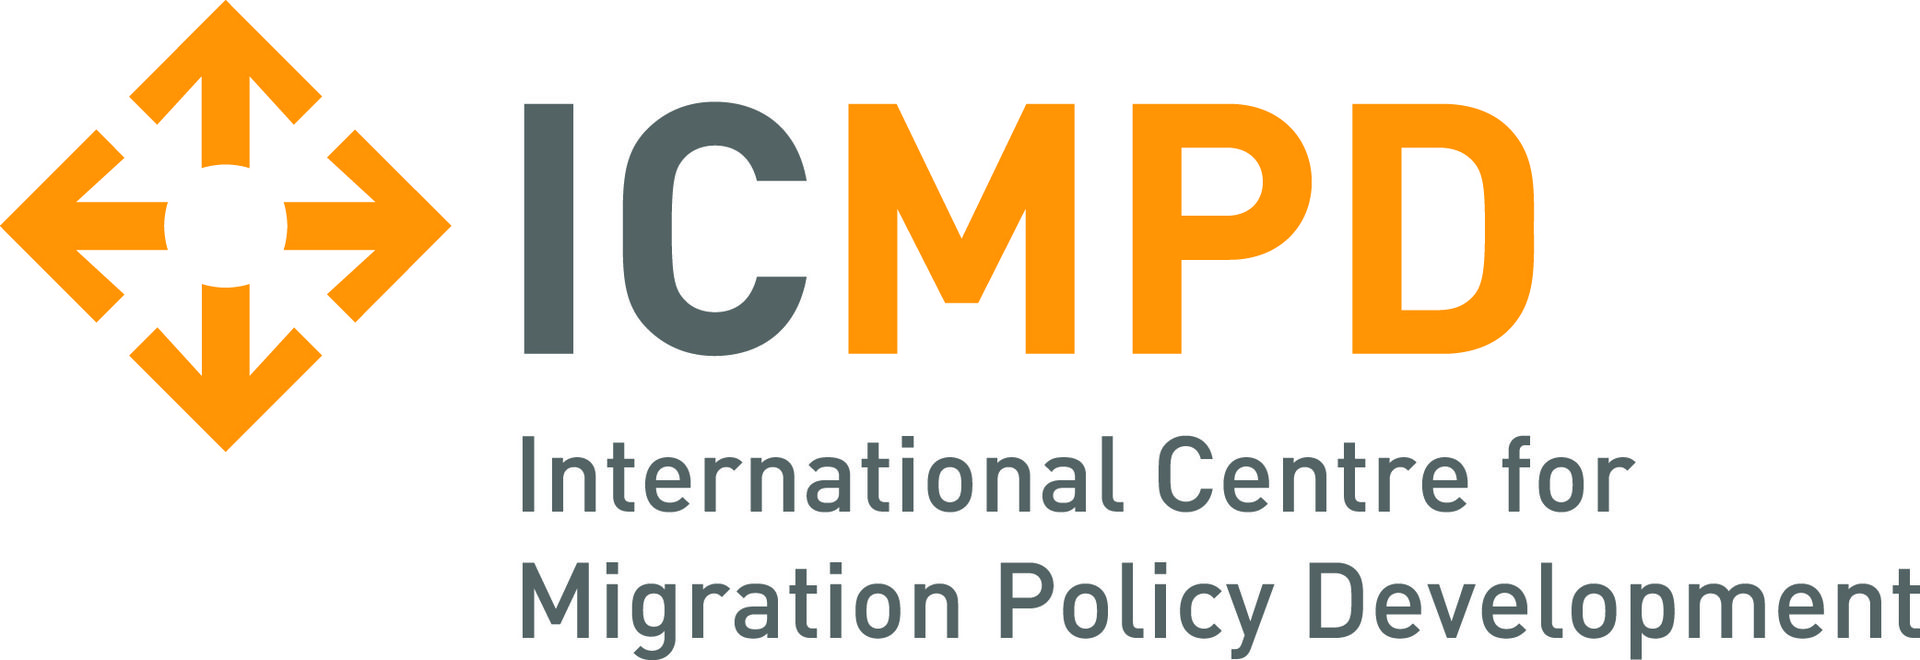 International Centre for Migration Policy Development Logo